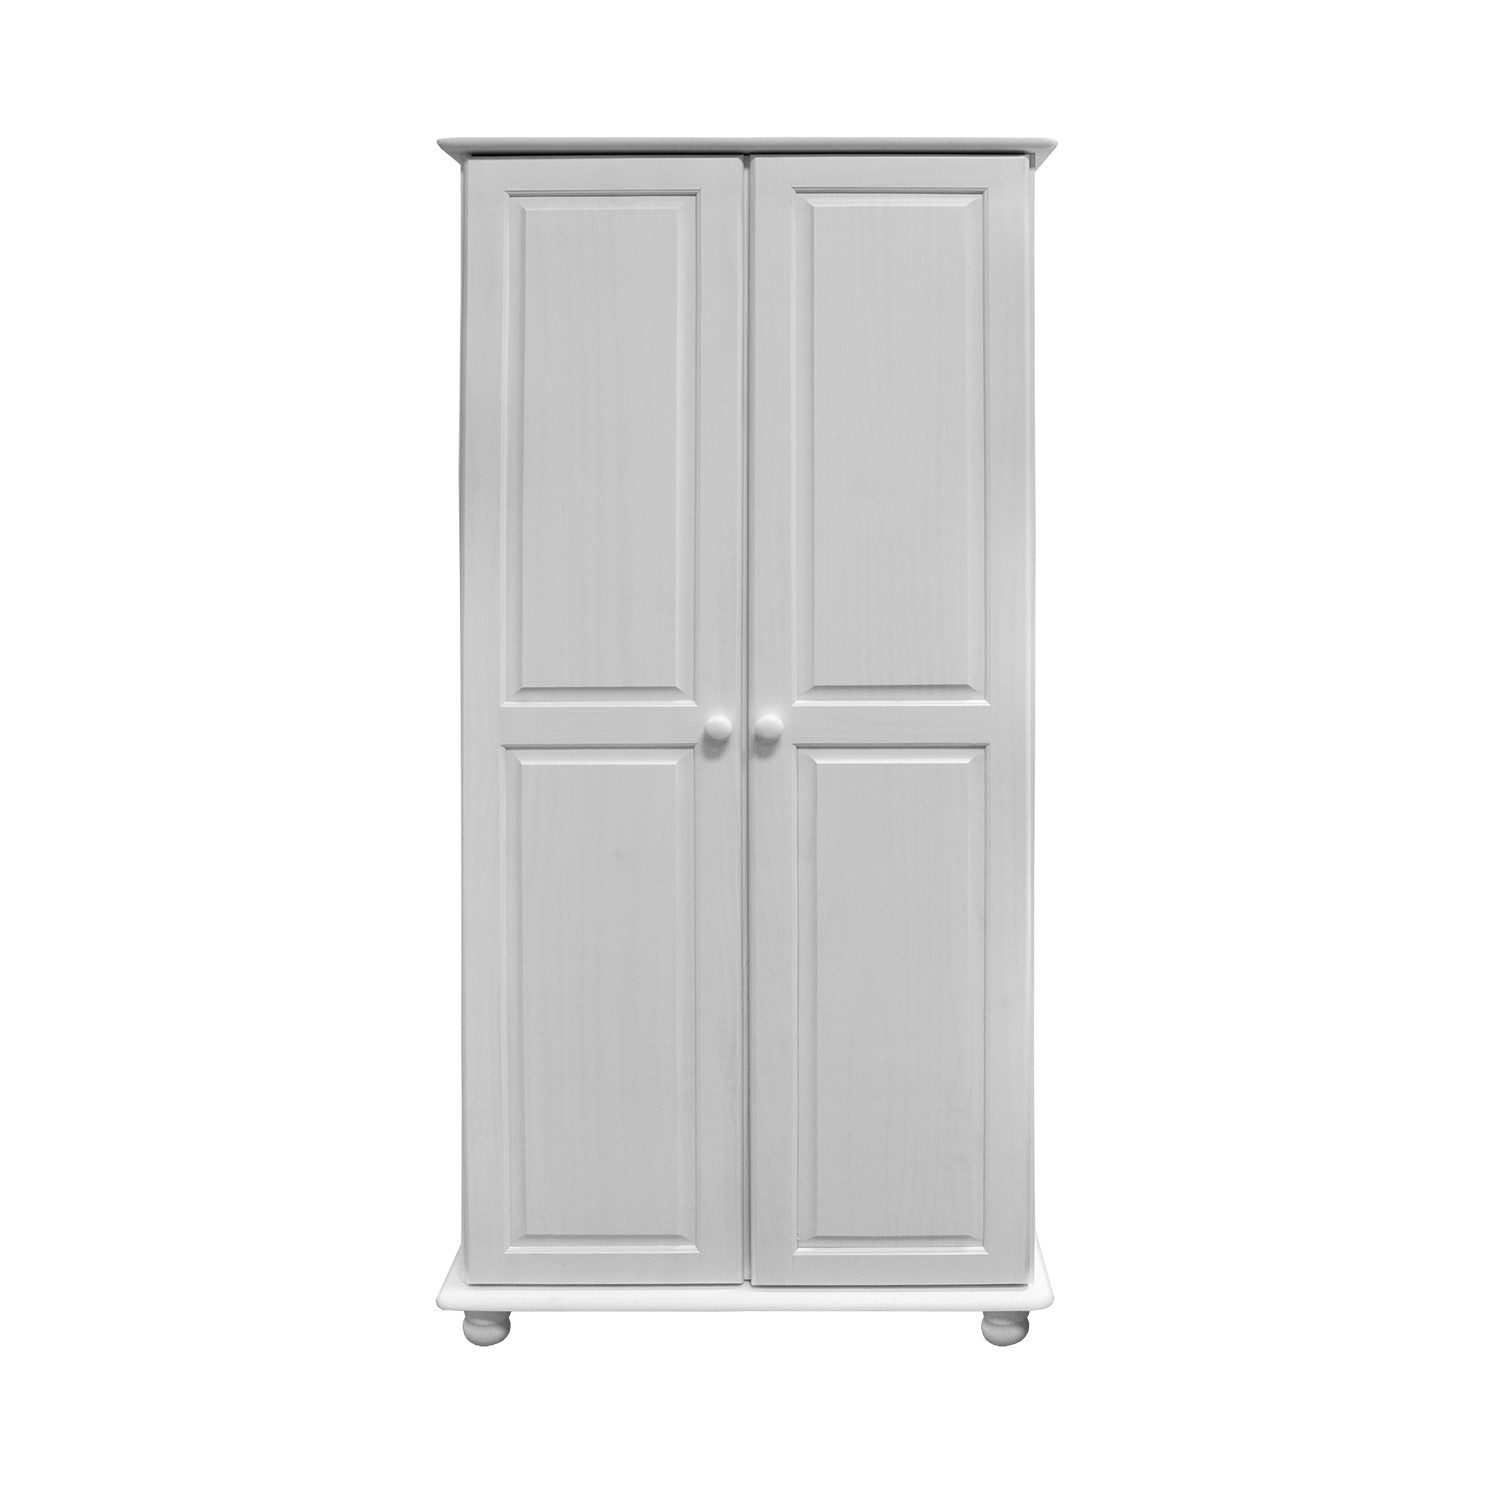 IDEA Шкаф 2-дверный 8860B белый лак